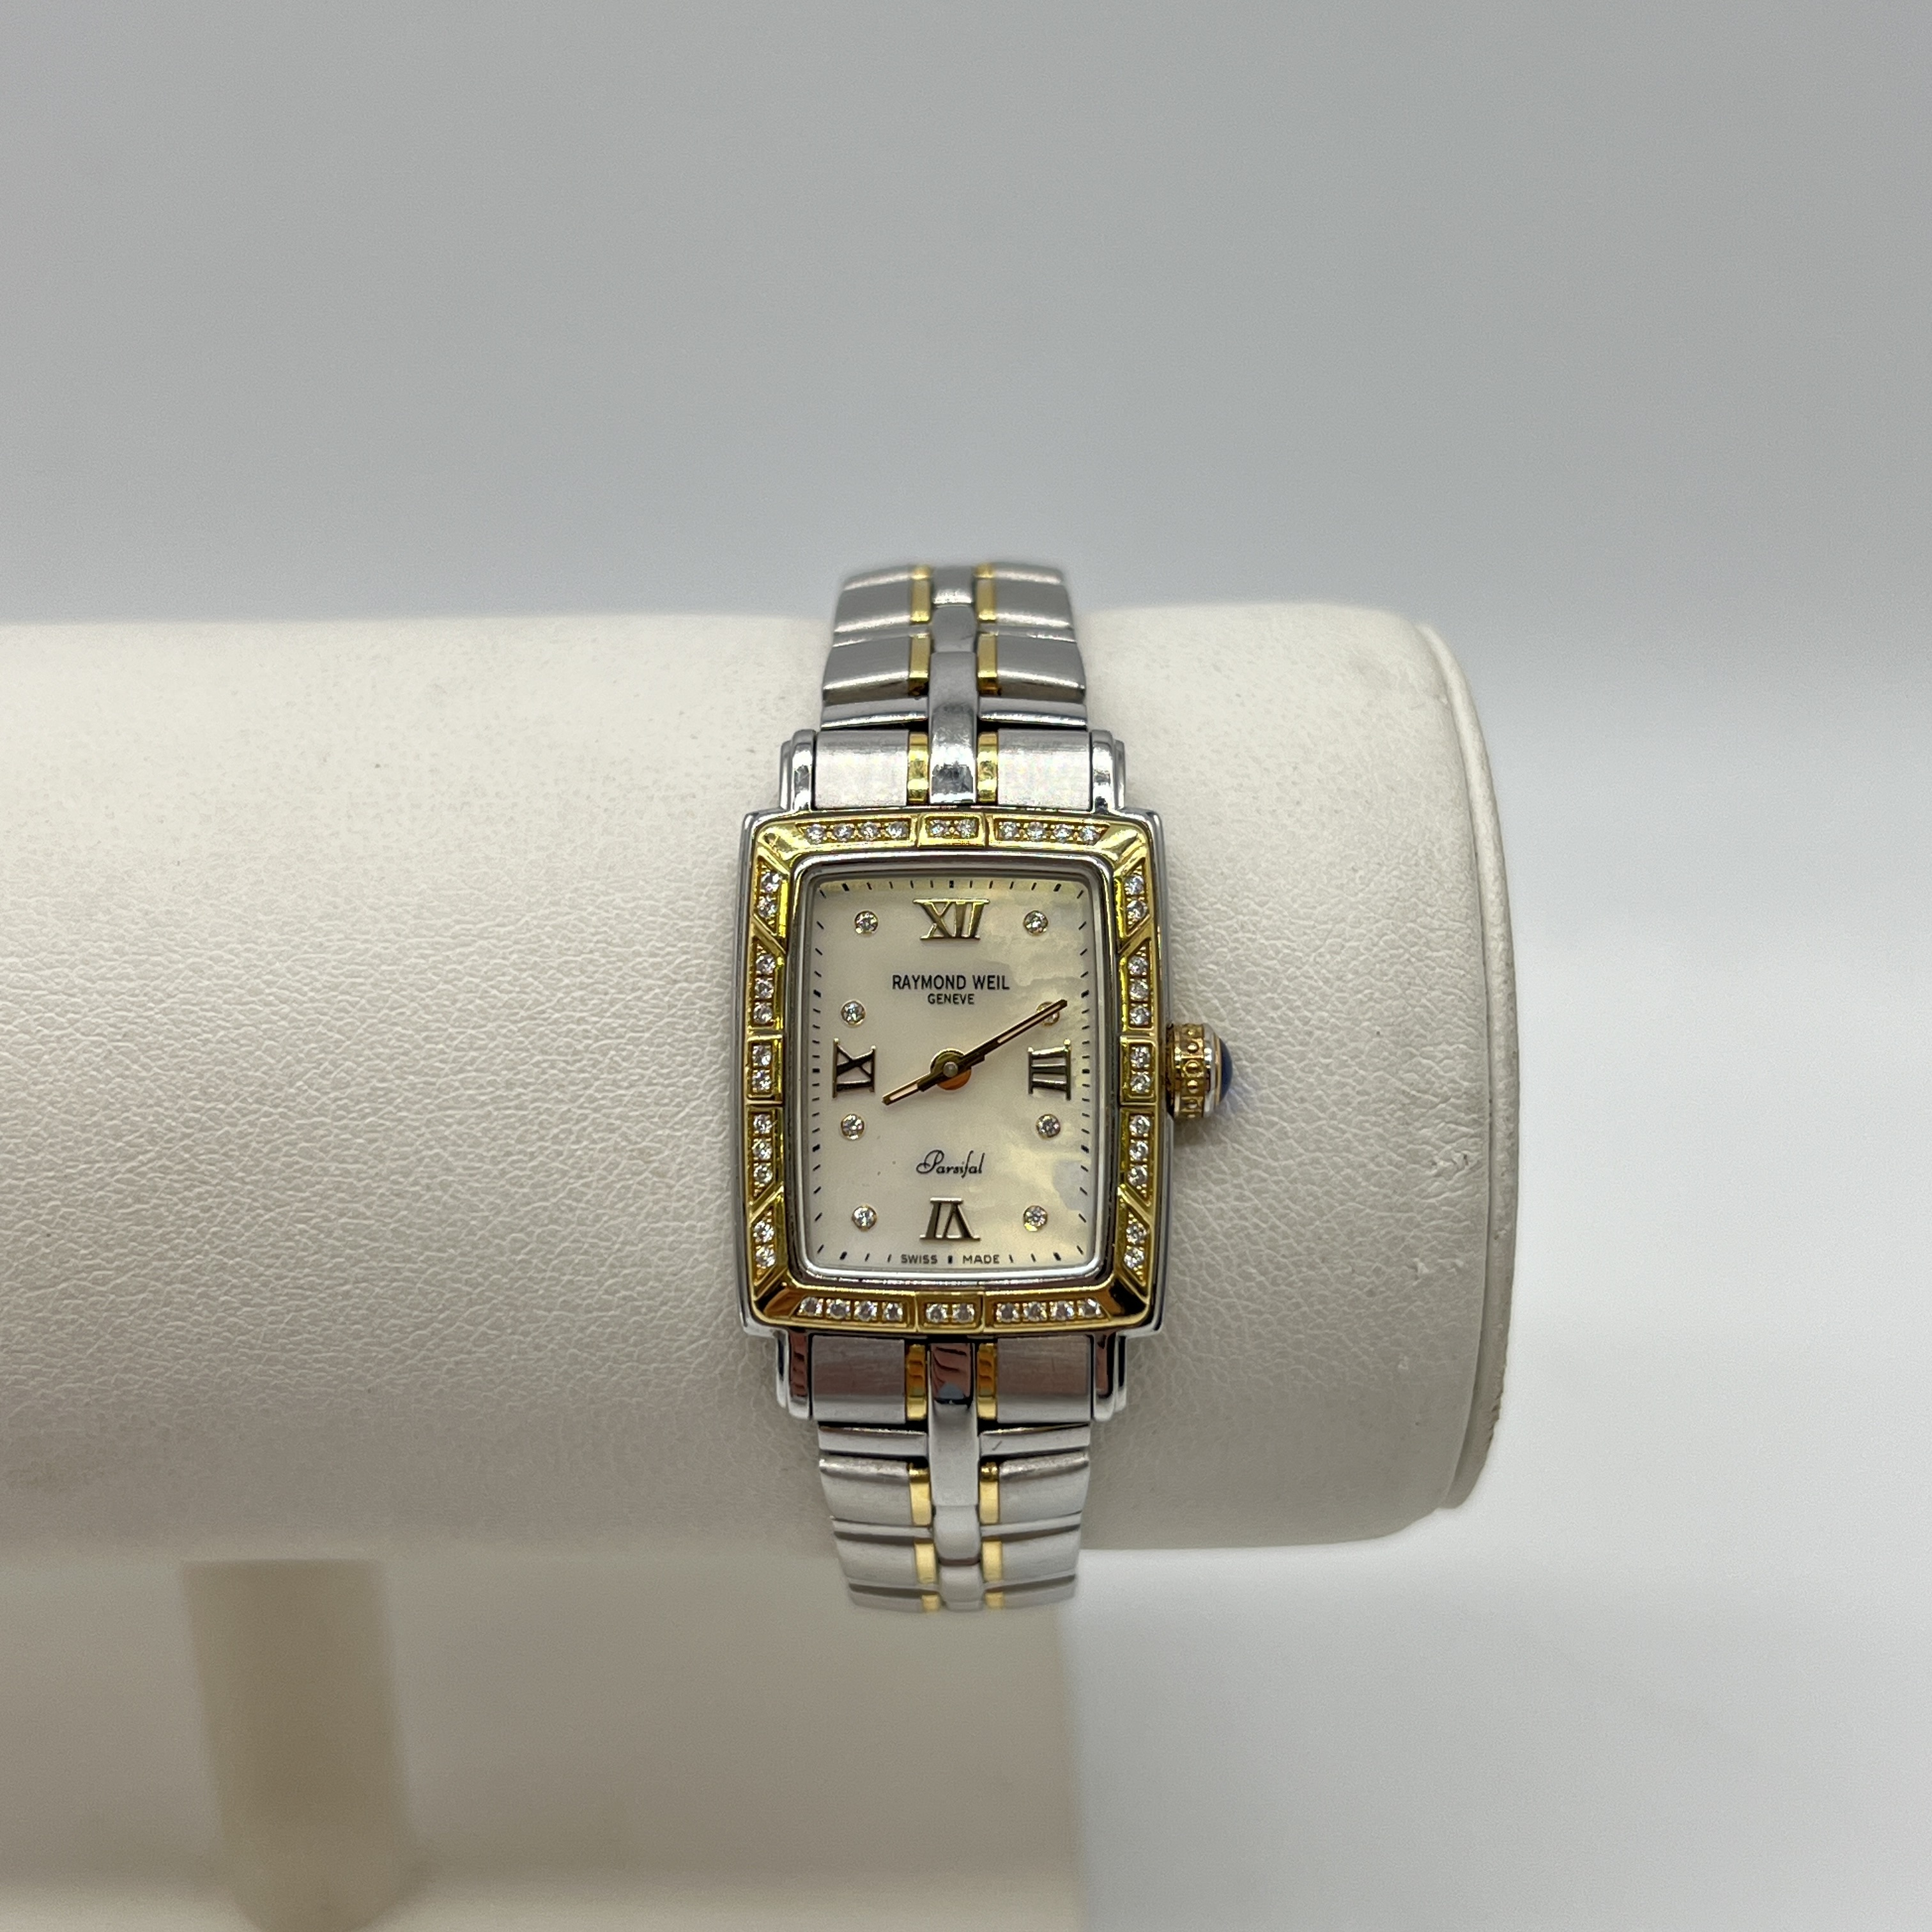 A Raymond Weil diamond set watch